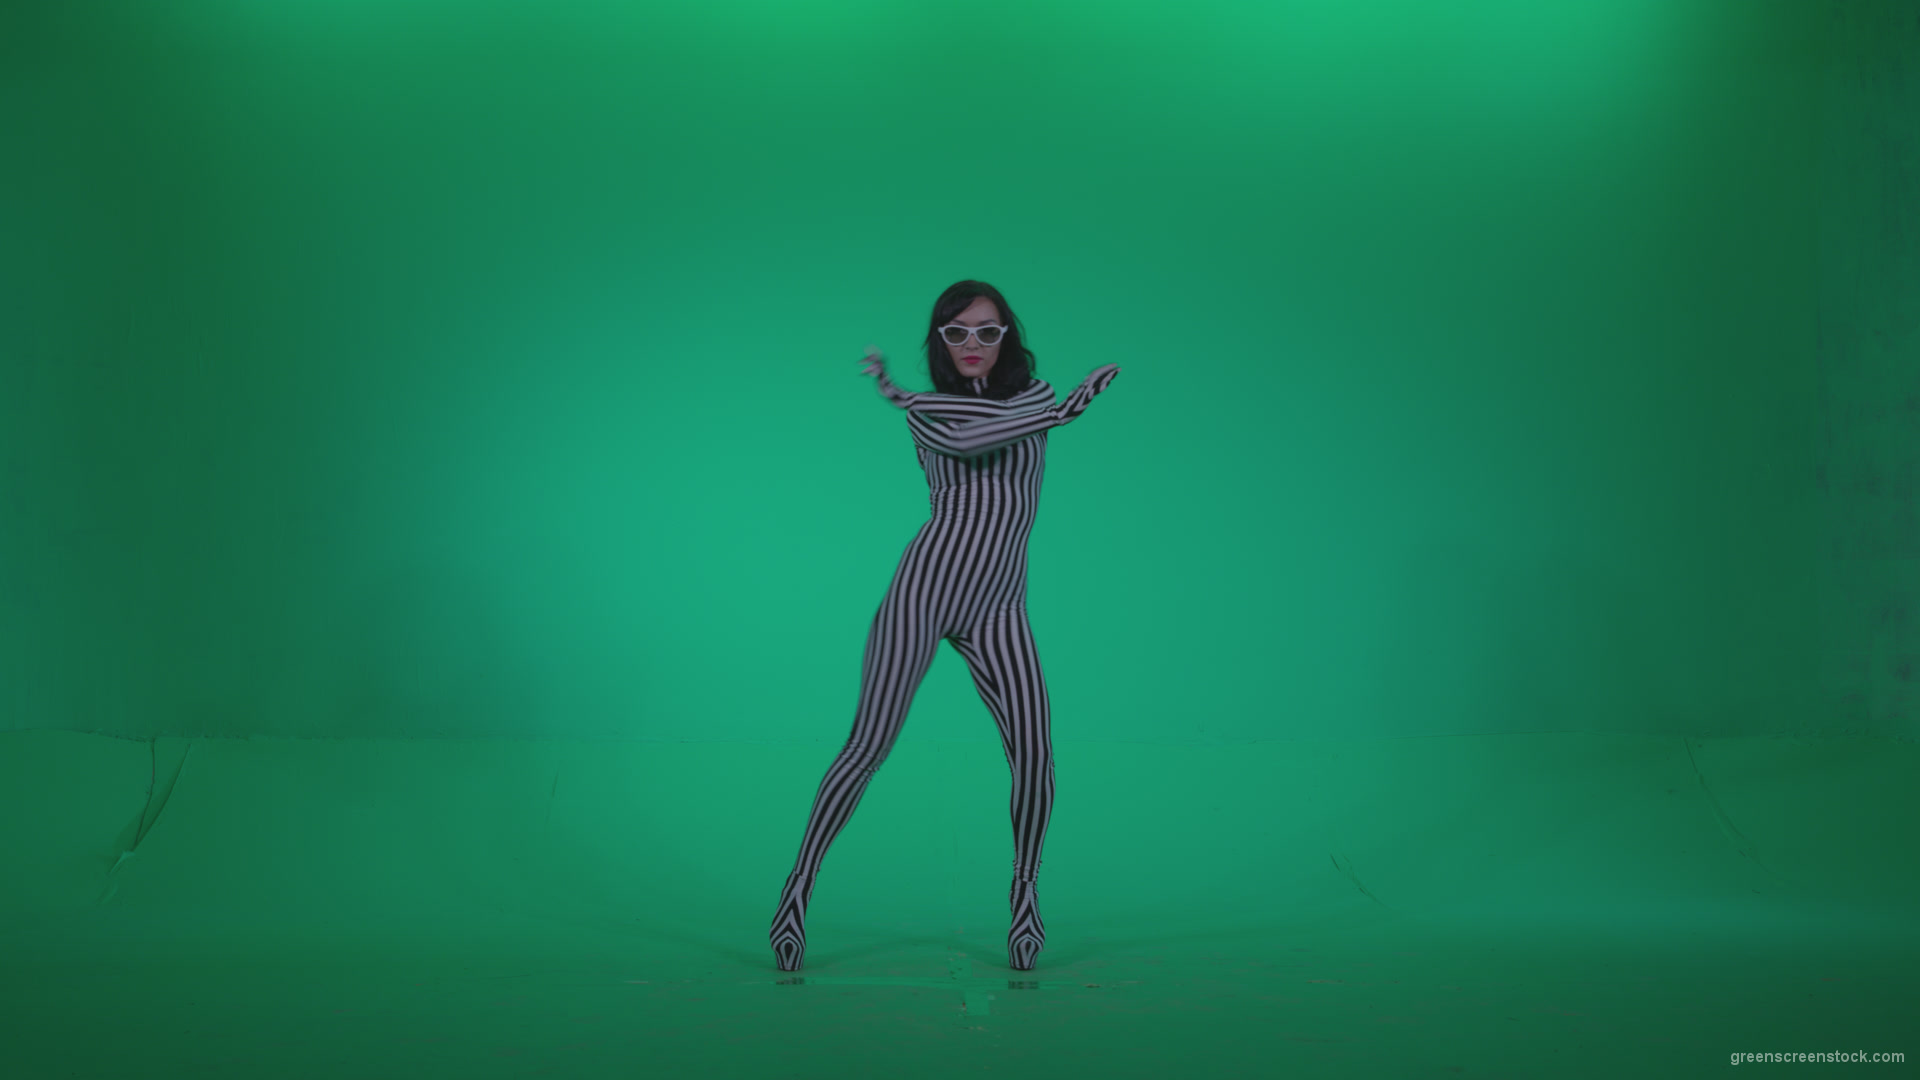 Go-go-Dancer-White-Stripes-s11-Green-Screen-Video-Footage_001 Green Screen Stock